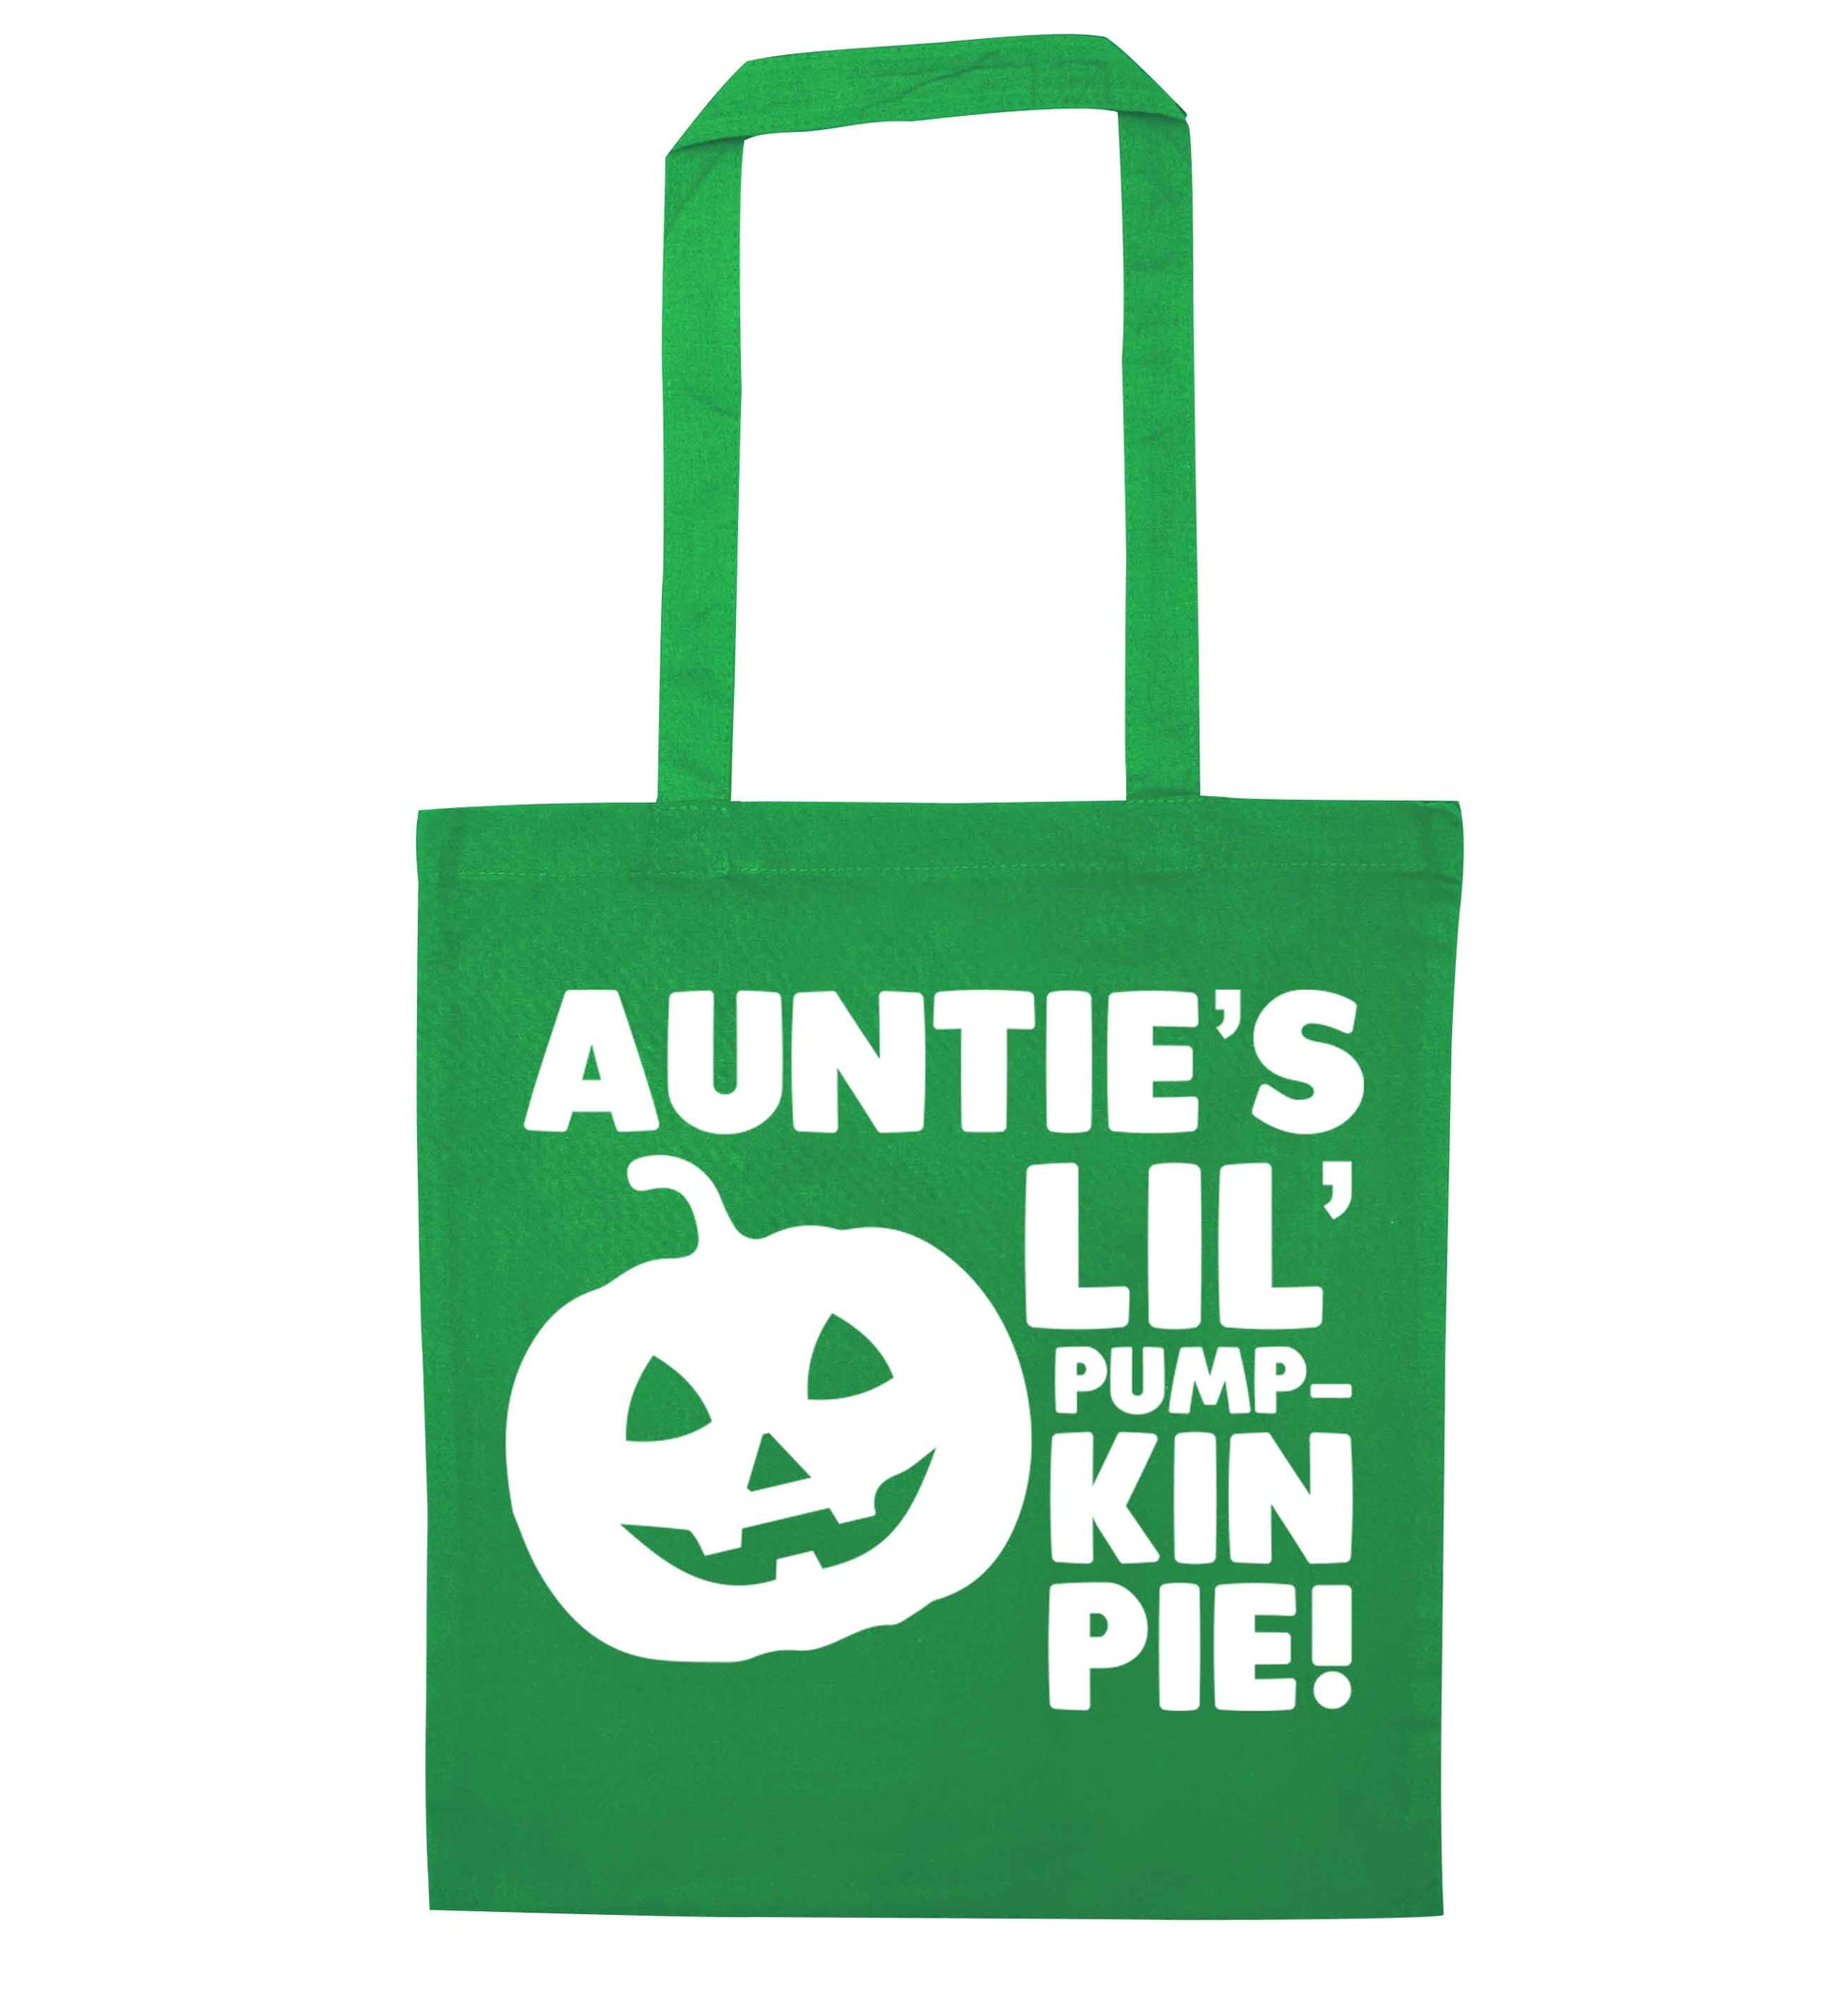 Auntie's lil' pumpkin pie green tote bag